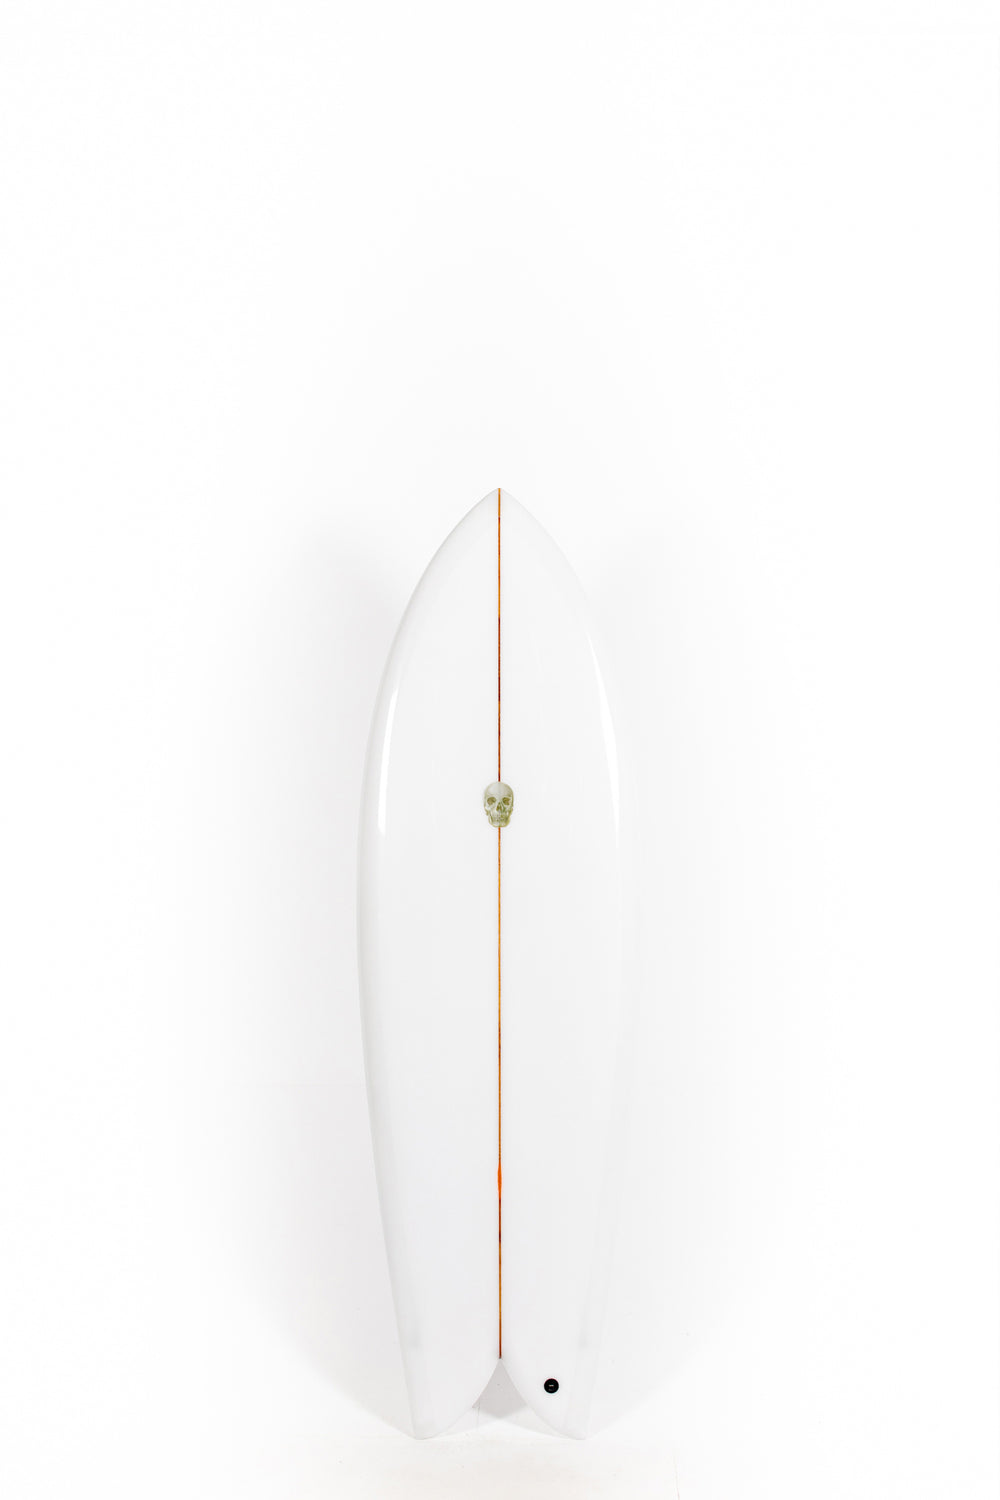 Pukas Surf Shop - Christenson Surfboards - CHRIS FISH - 5'10